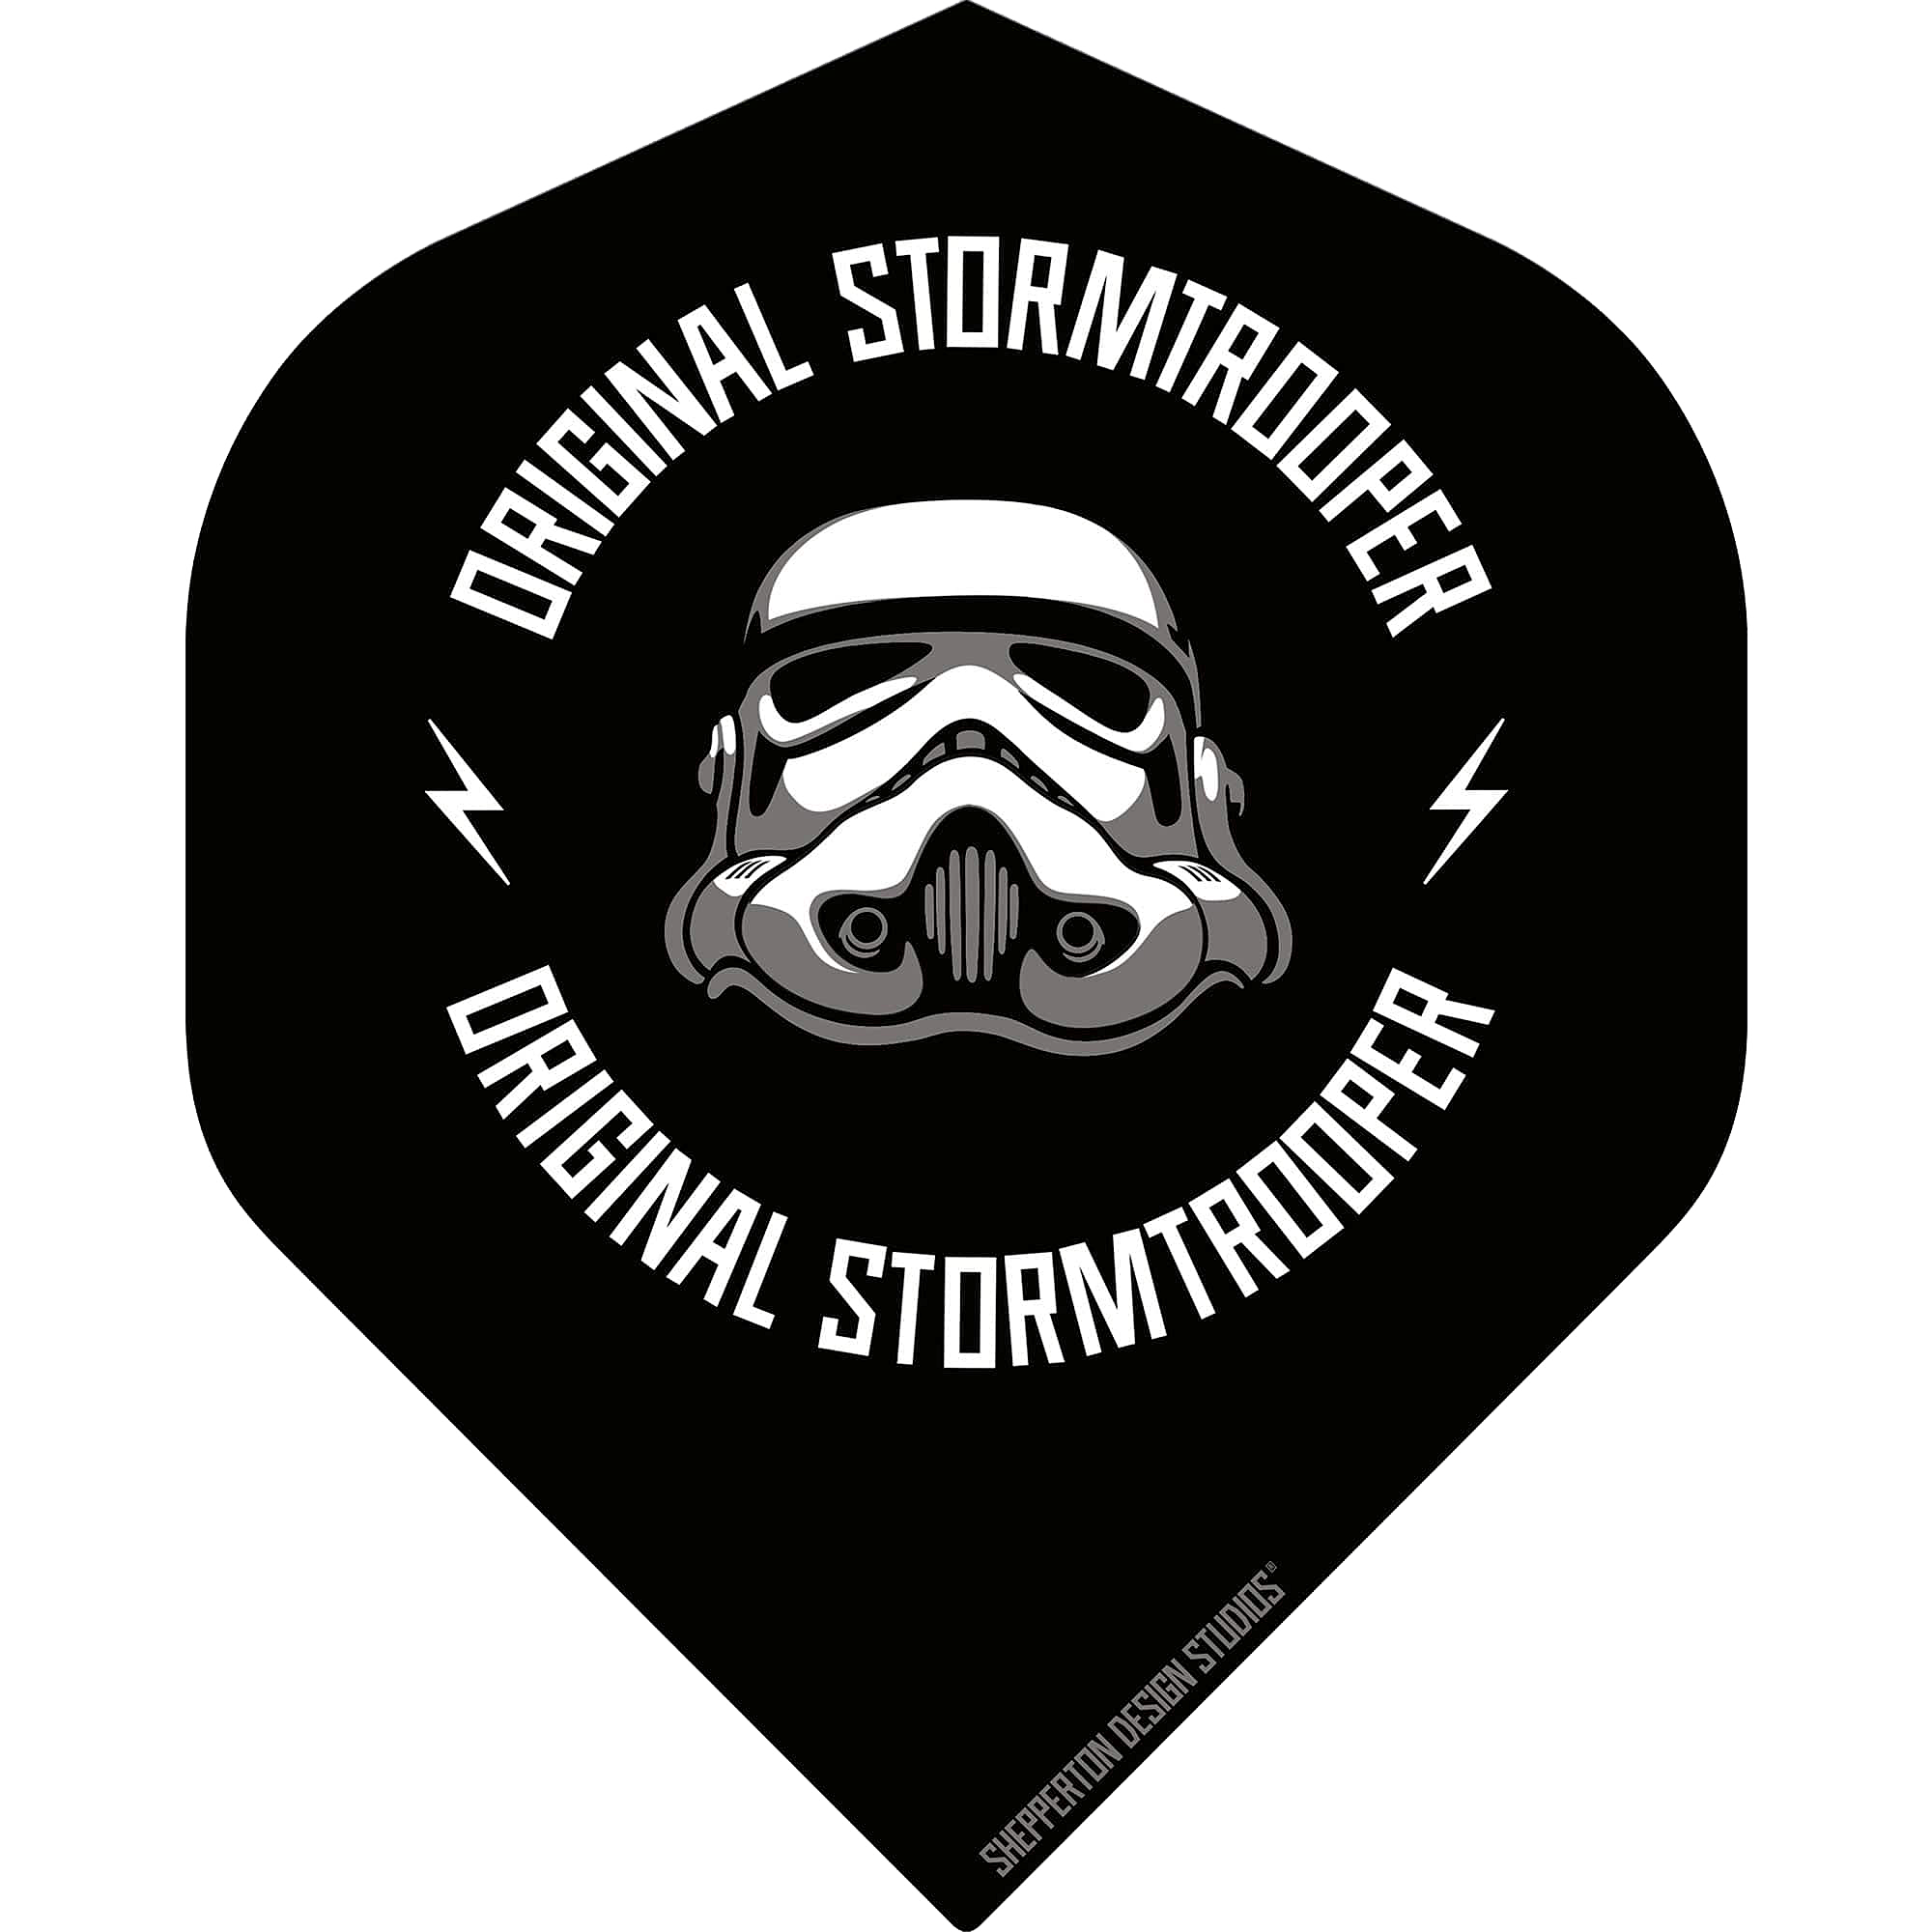 DartSturm.de - Storm Trooper Logo Flight - Standard